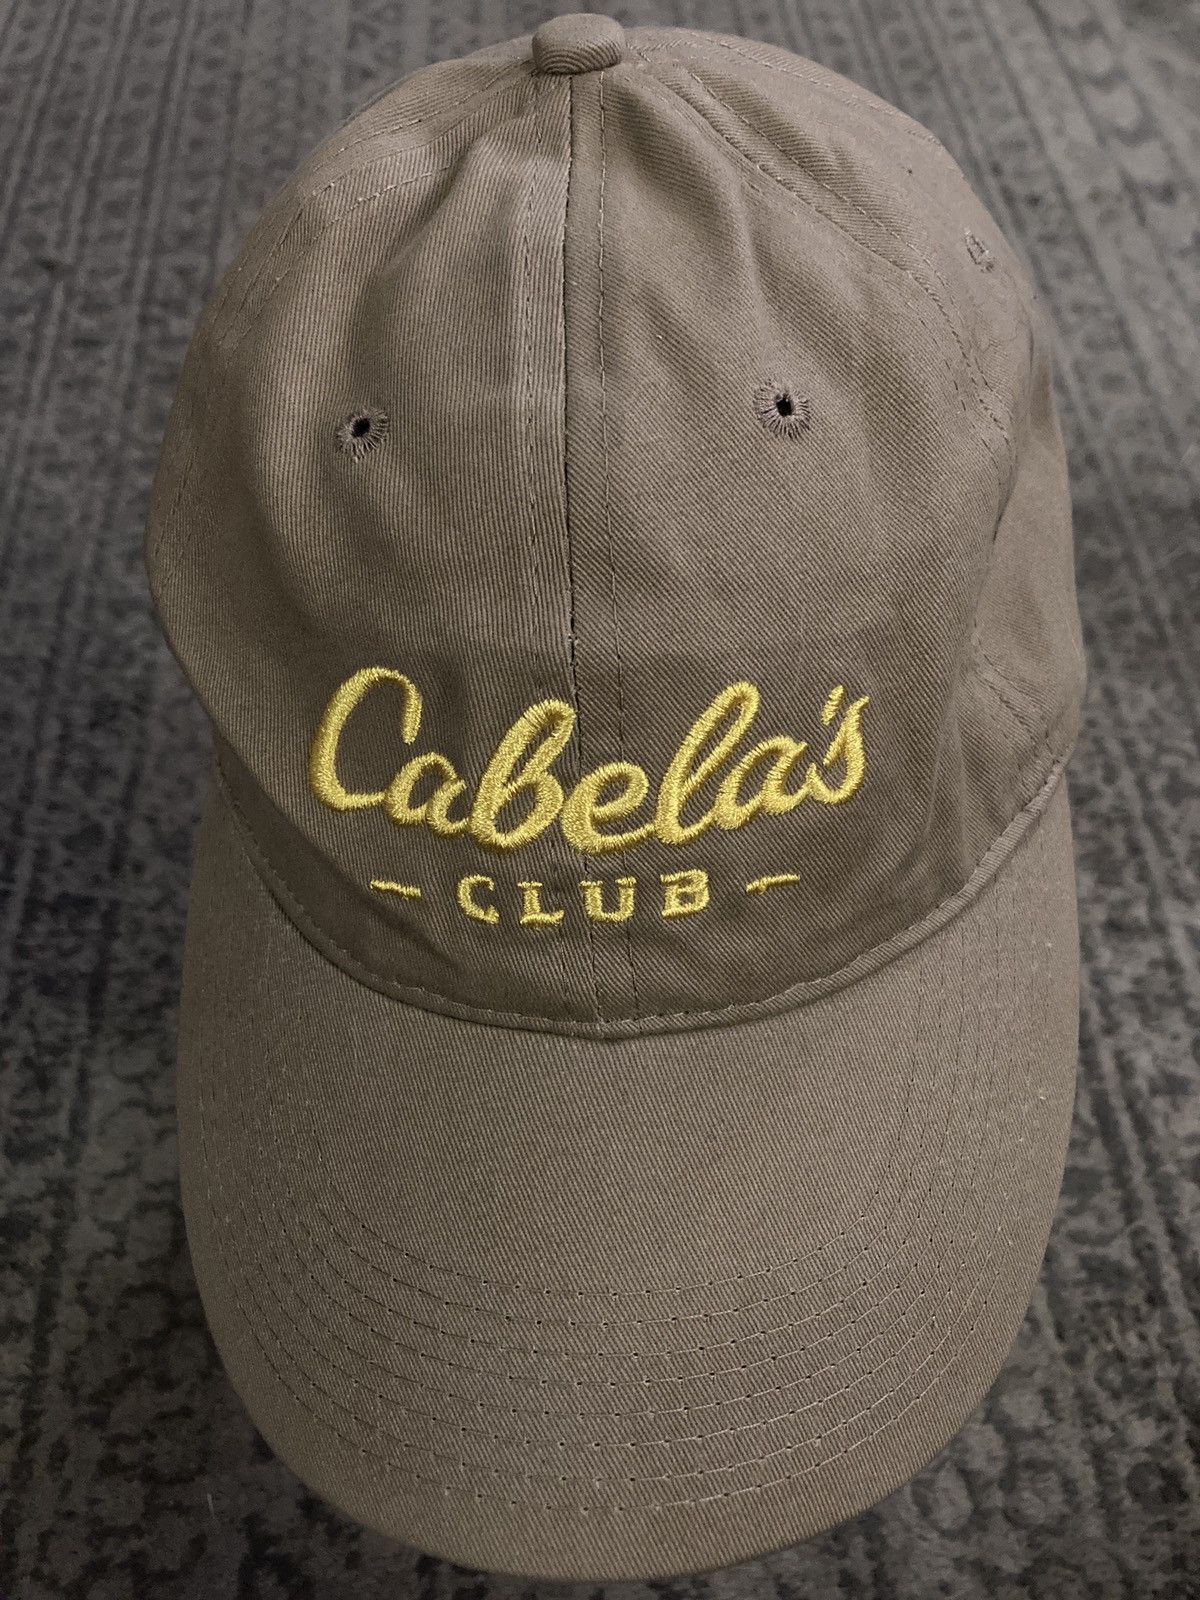 Vintage Cabelas CLUB sports fishing golf dad hat cap vintage trucker